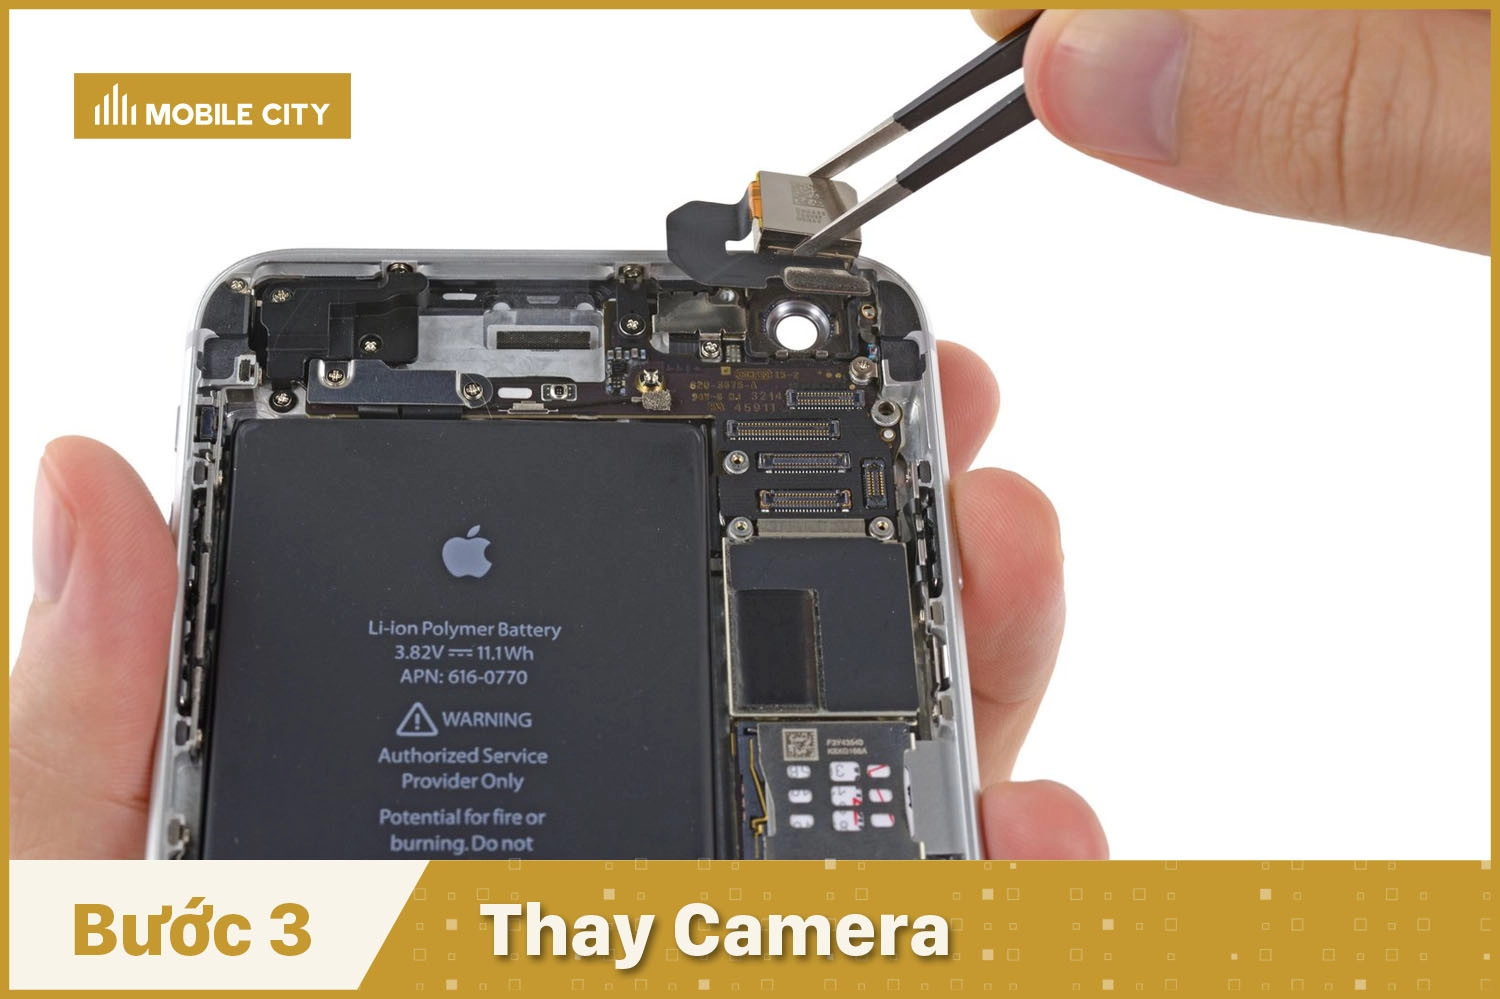 Thay Camera cho iPhone 6 Plus